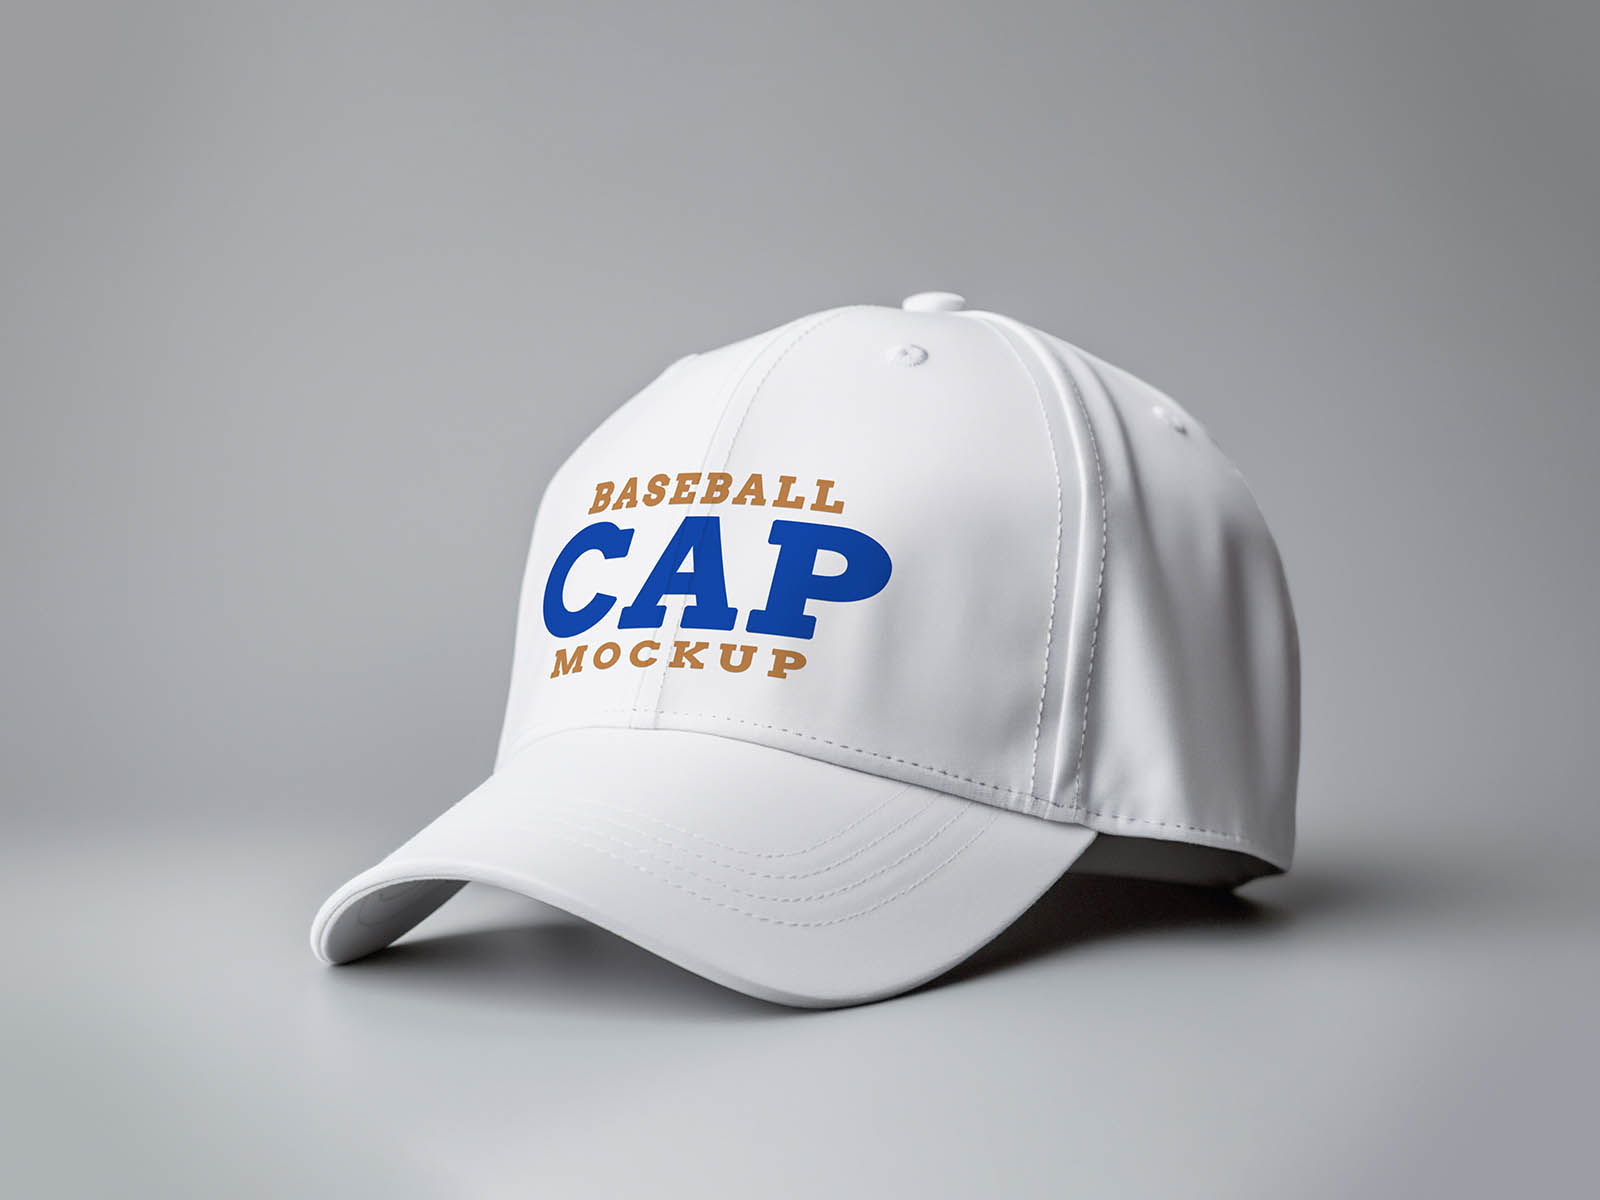 Baseball Cap Mockup - Pixcrafter